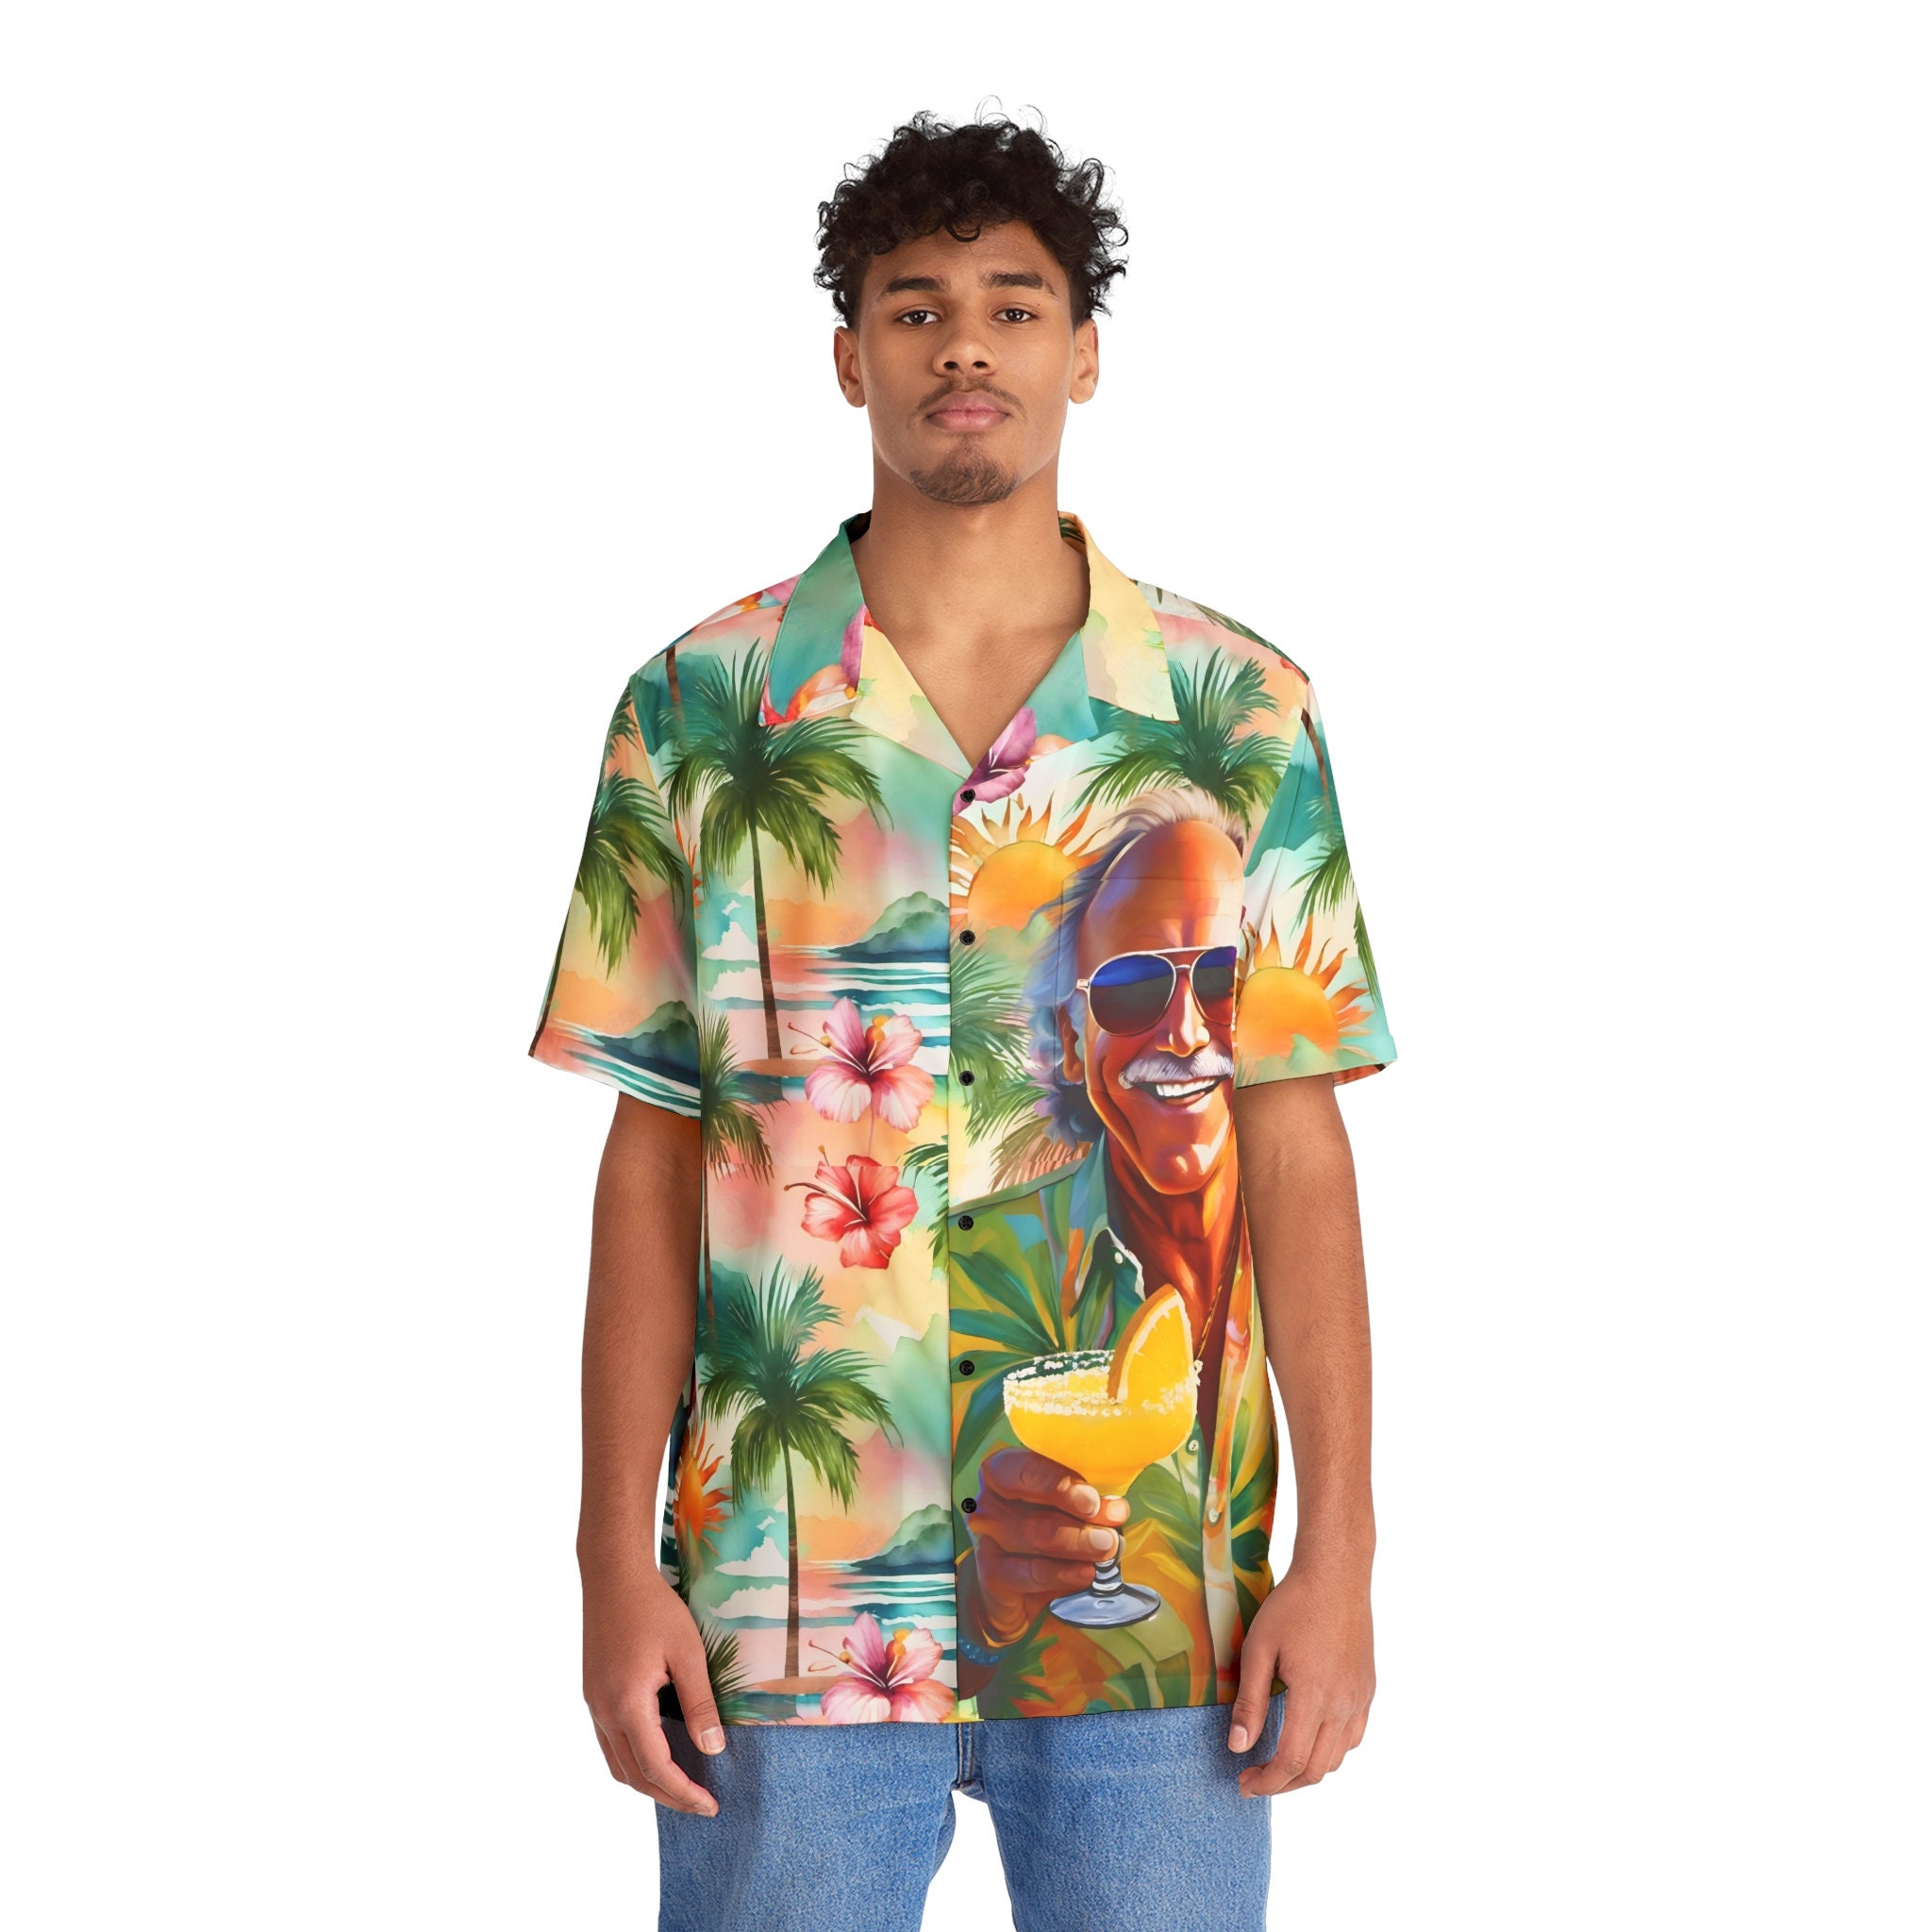 Jimmy Buffett Inspired Margaritaville Hawaiian Shirt sold by Ranna ...